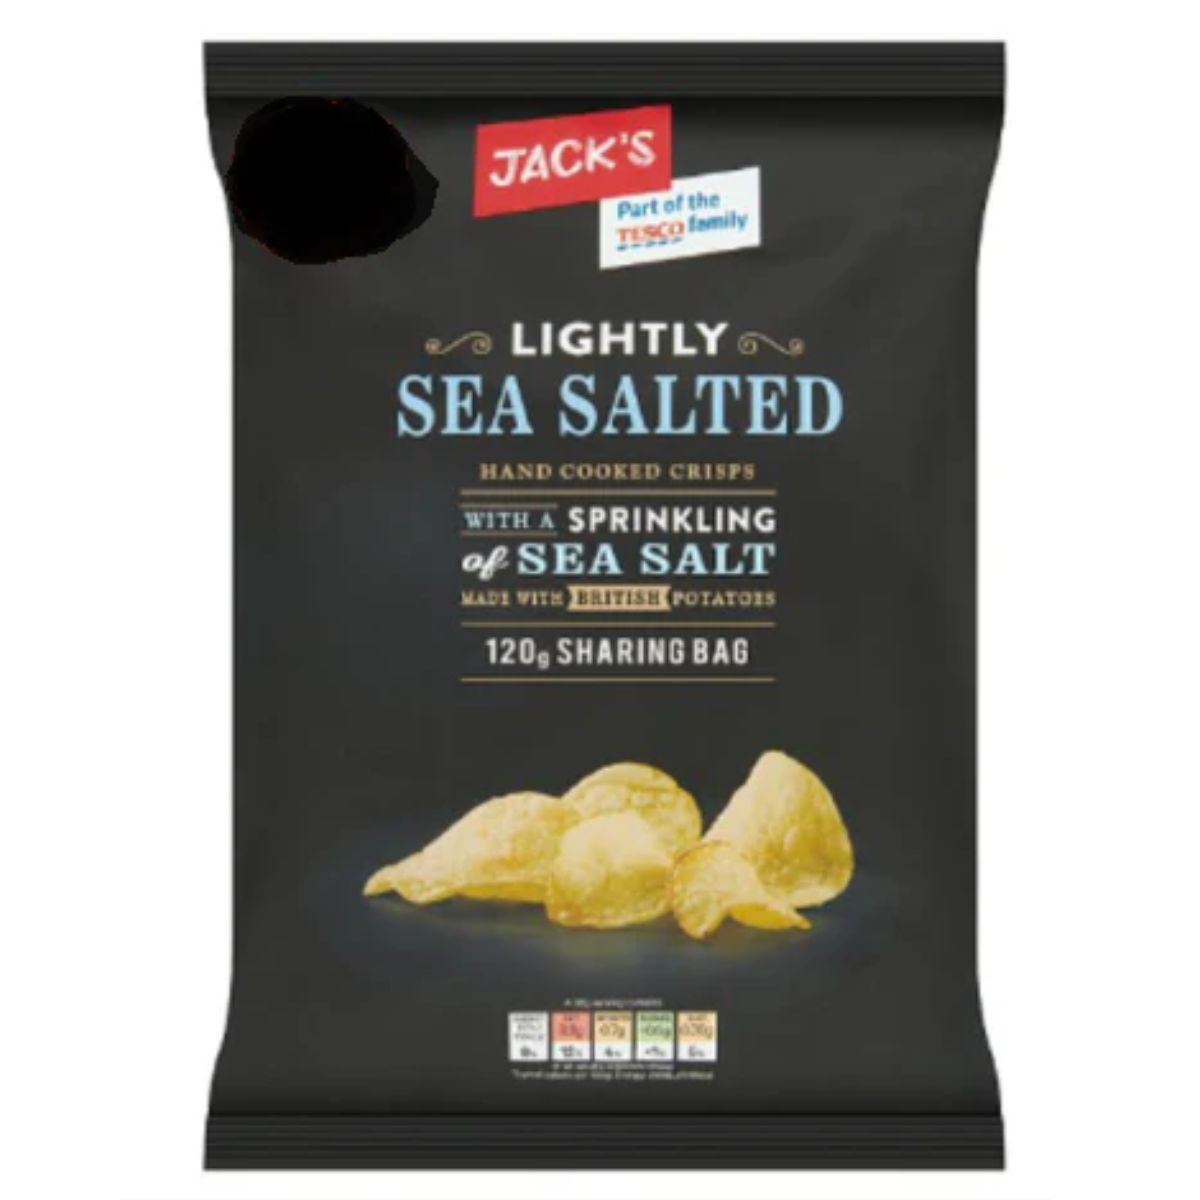 Jacks - Lightly Sea Salted Hand Cooked Crisps - 120g